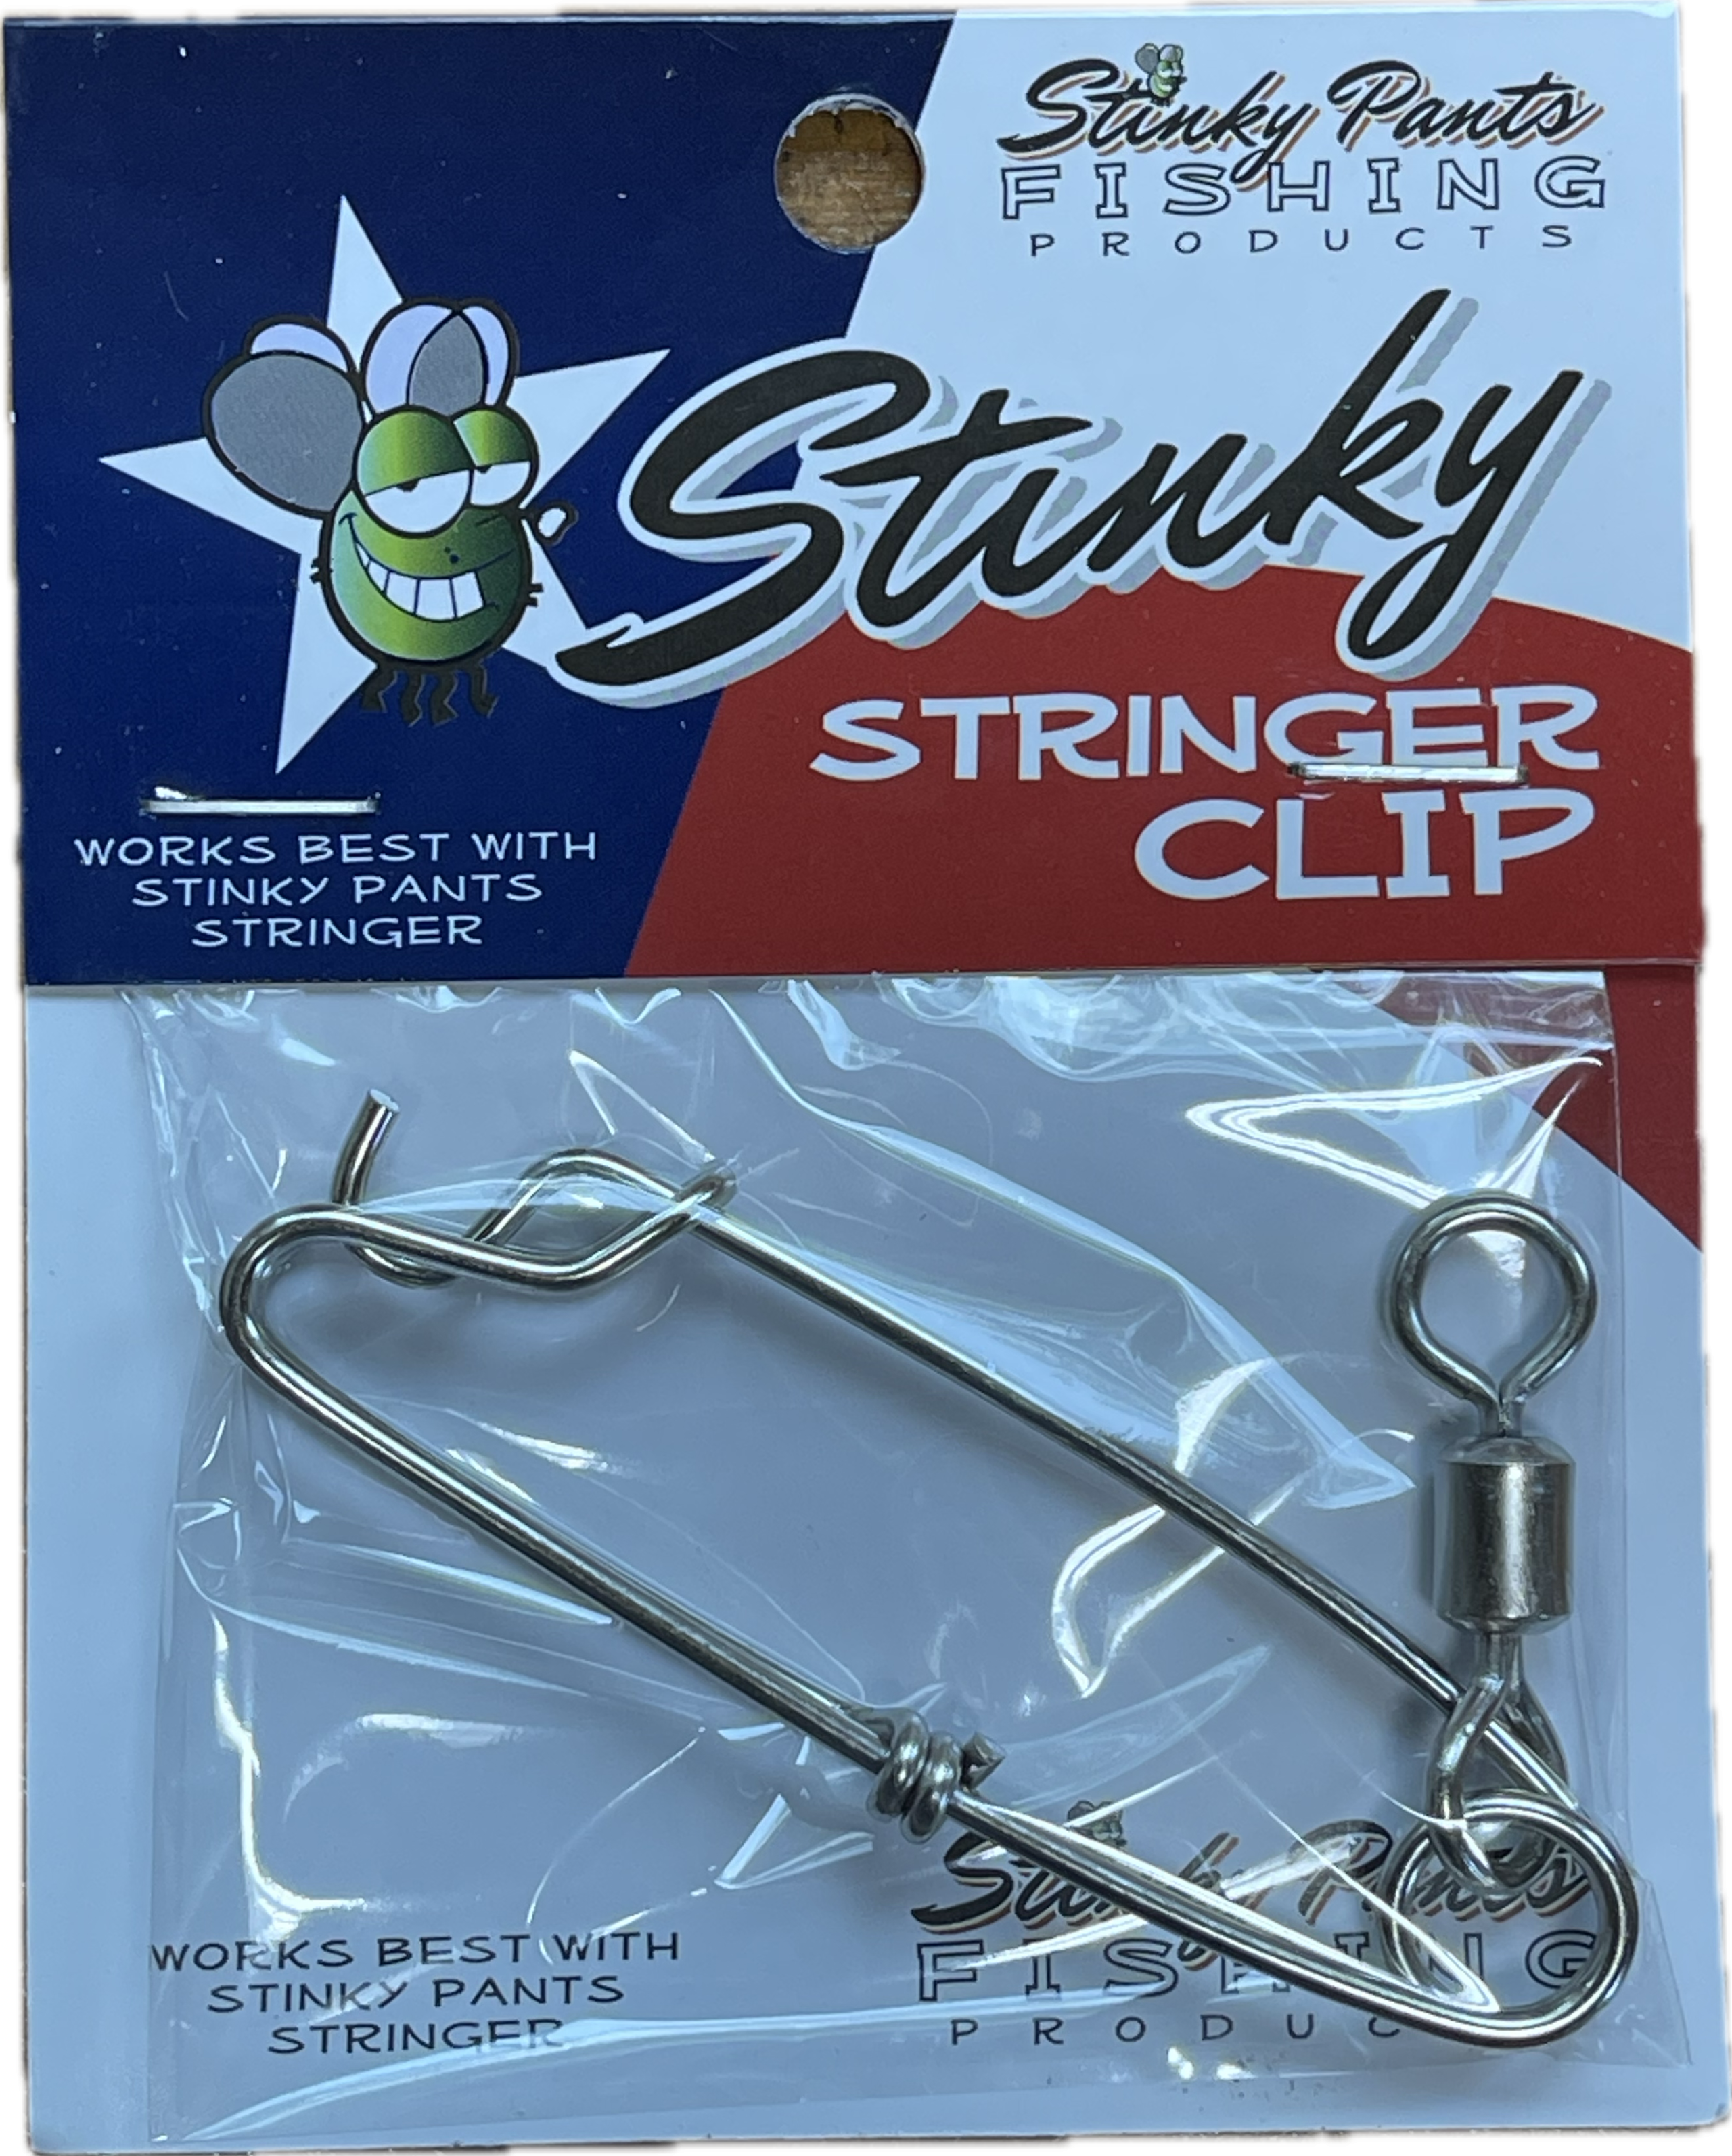 Stringer Clip - Stinky Pants Fishing